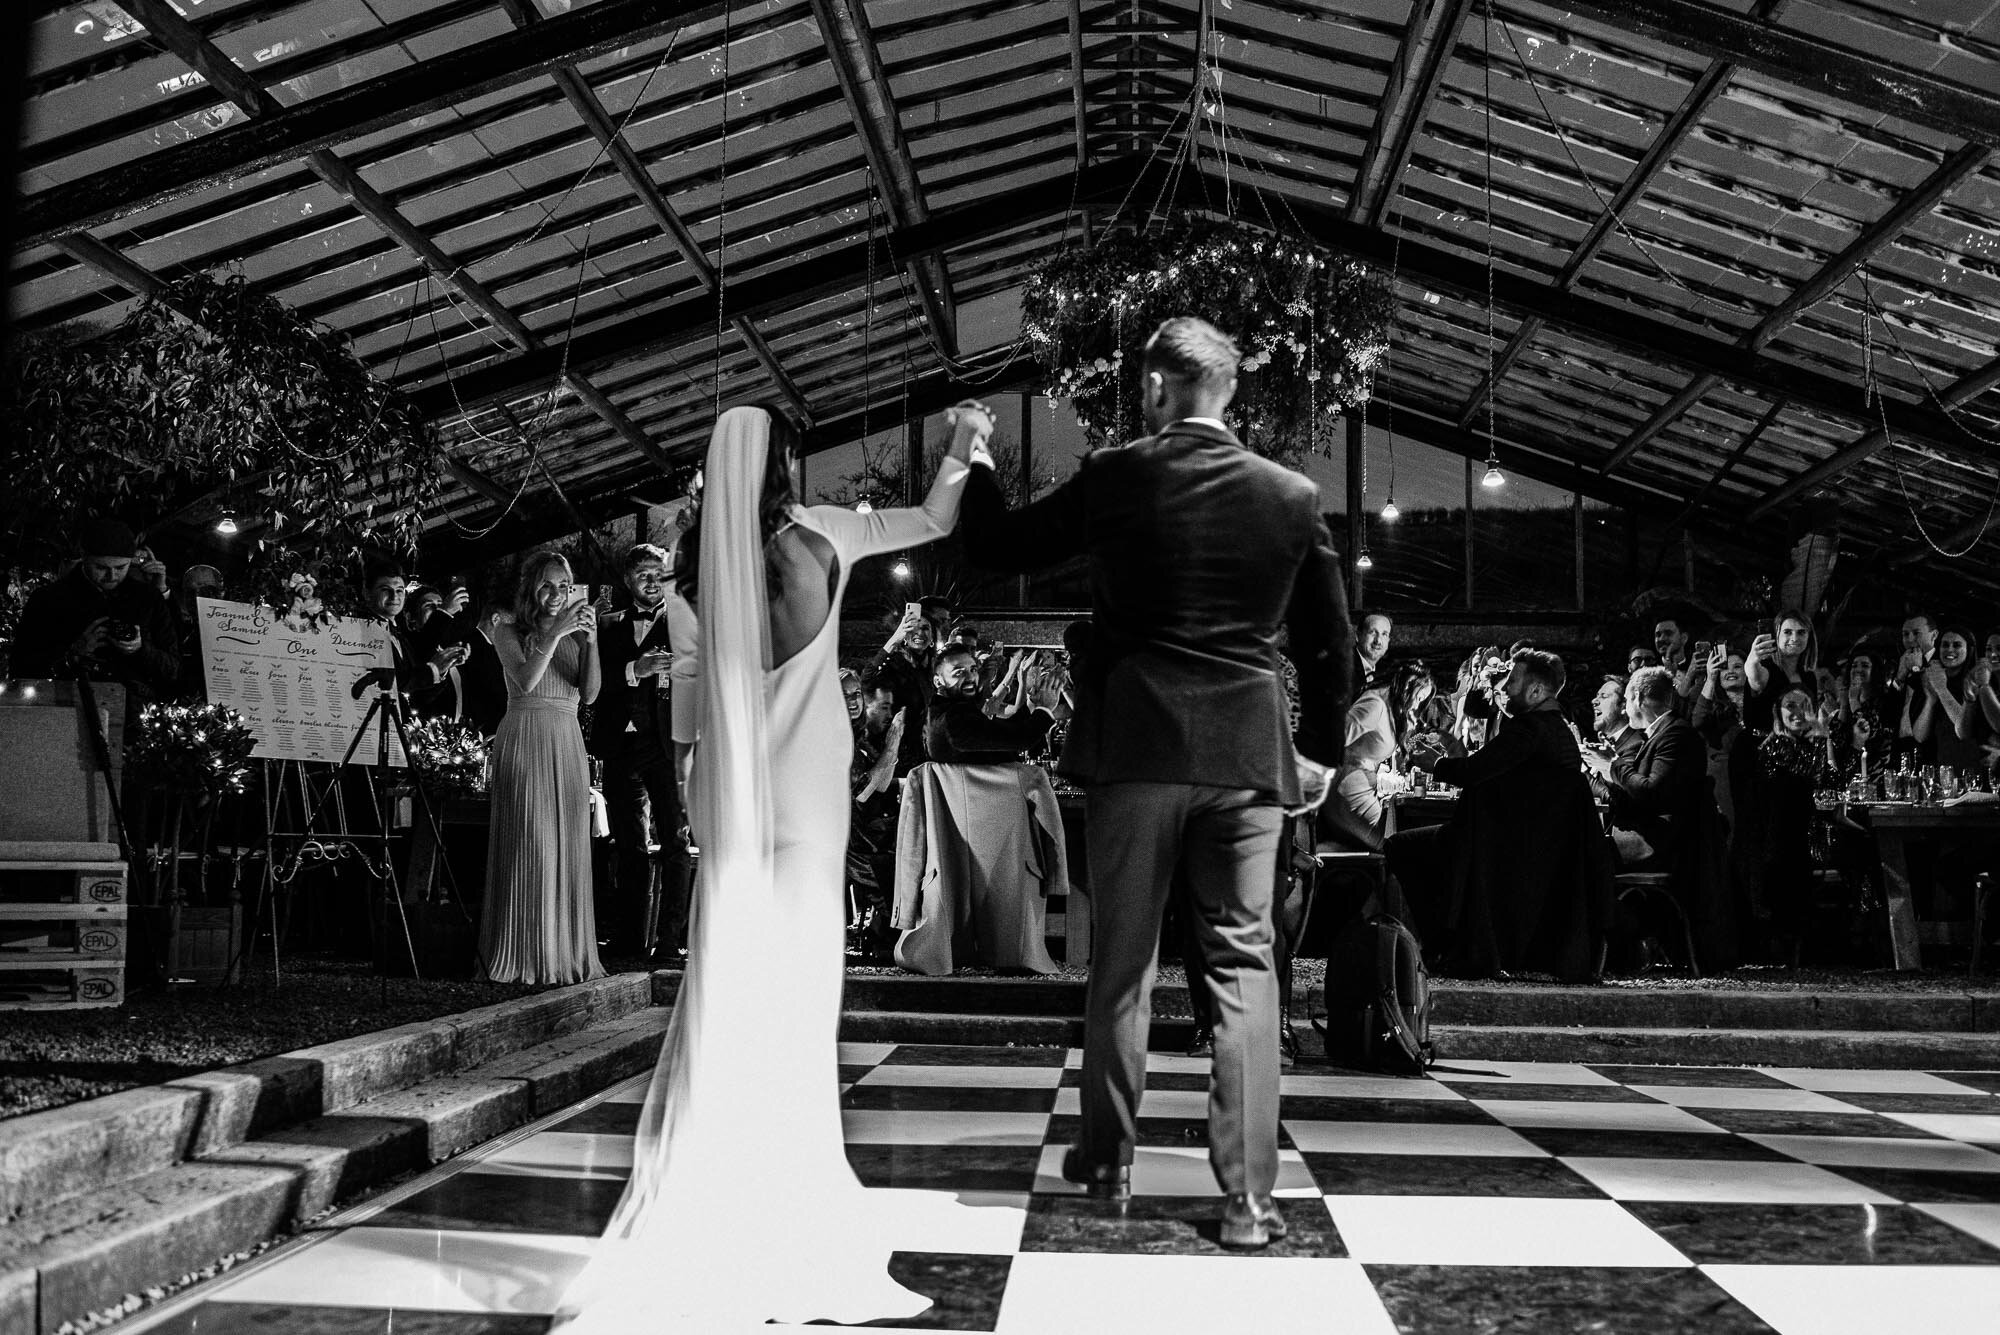 Anran Barn Wedding // Devon Wedding Photographer Katy Jones // Natural style wedding photography  // Fine art romantic images